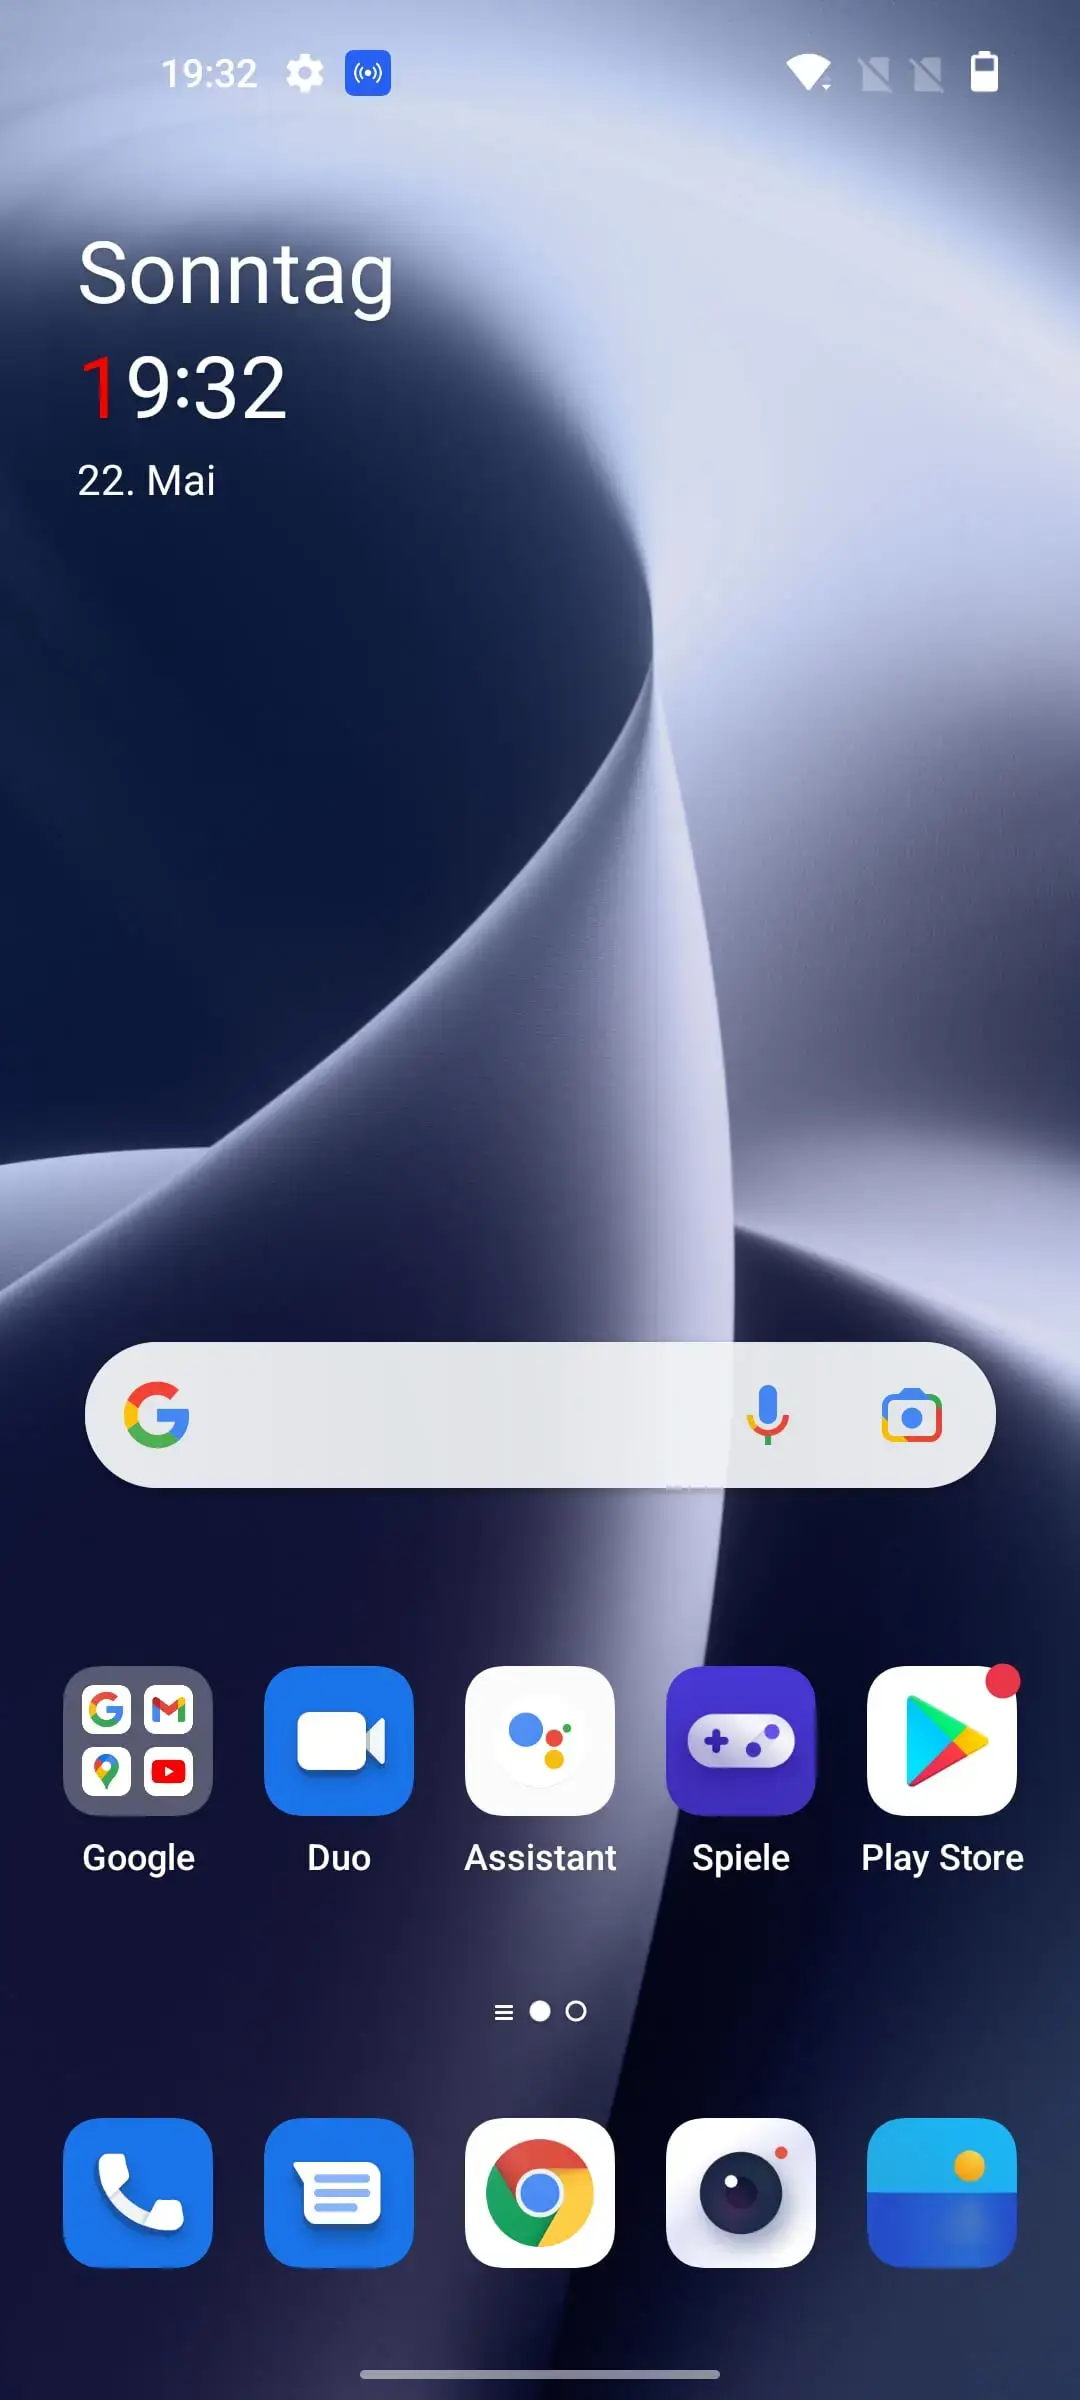 OnePlus Nord 2T 5G Screenshot